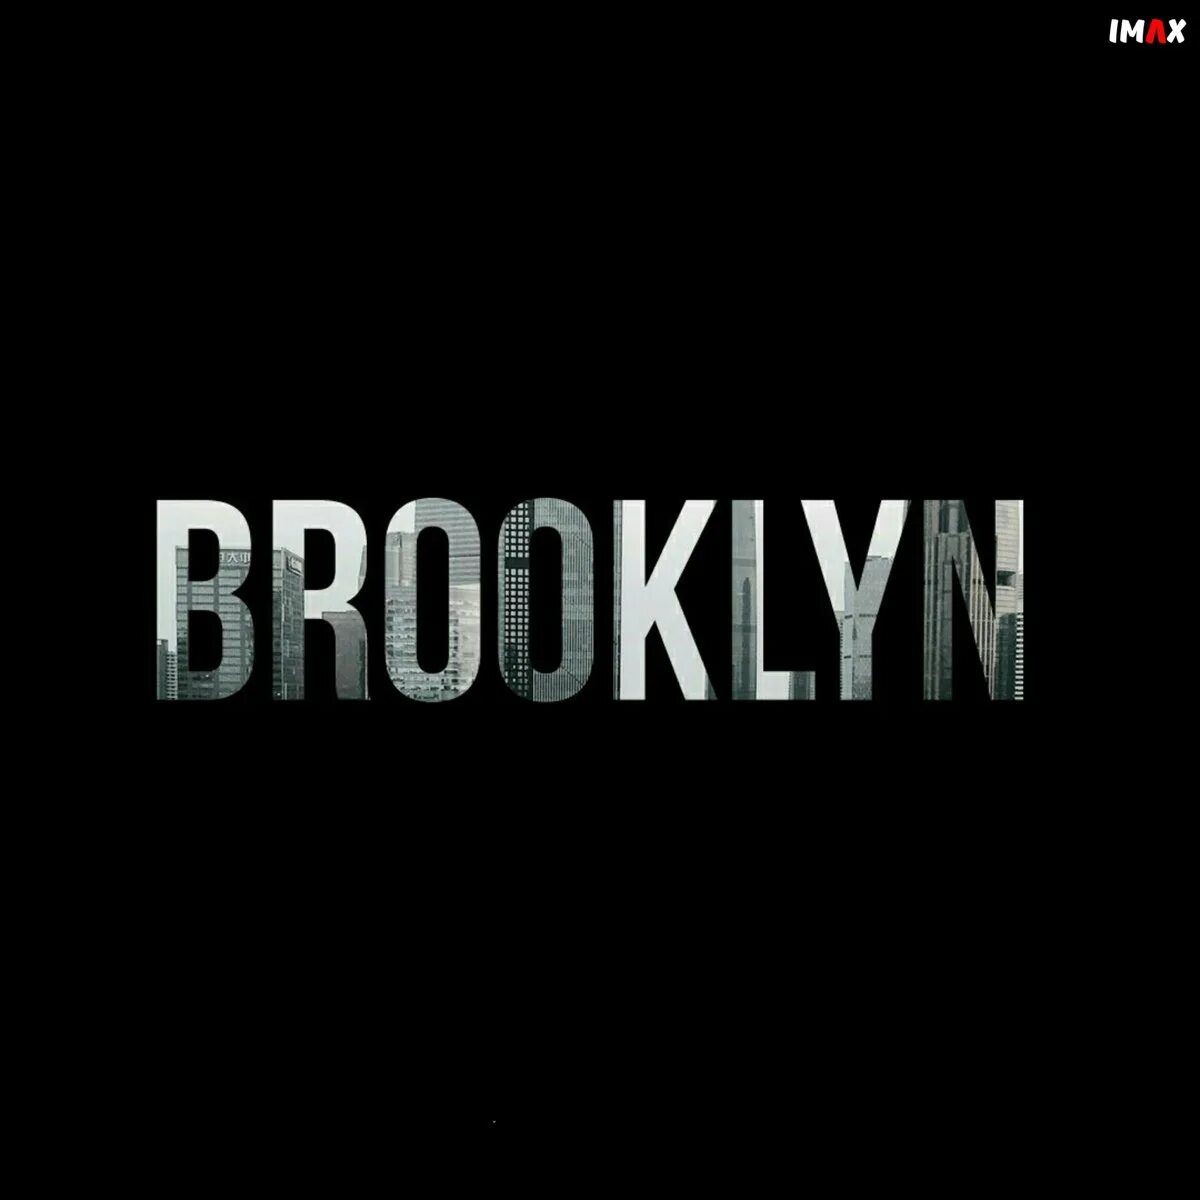 Это бруклин песня. Brooklyn Remix. Бруклин песня. Бруклин ремикс. Музыка Brooklyn Remix.